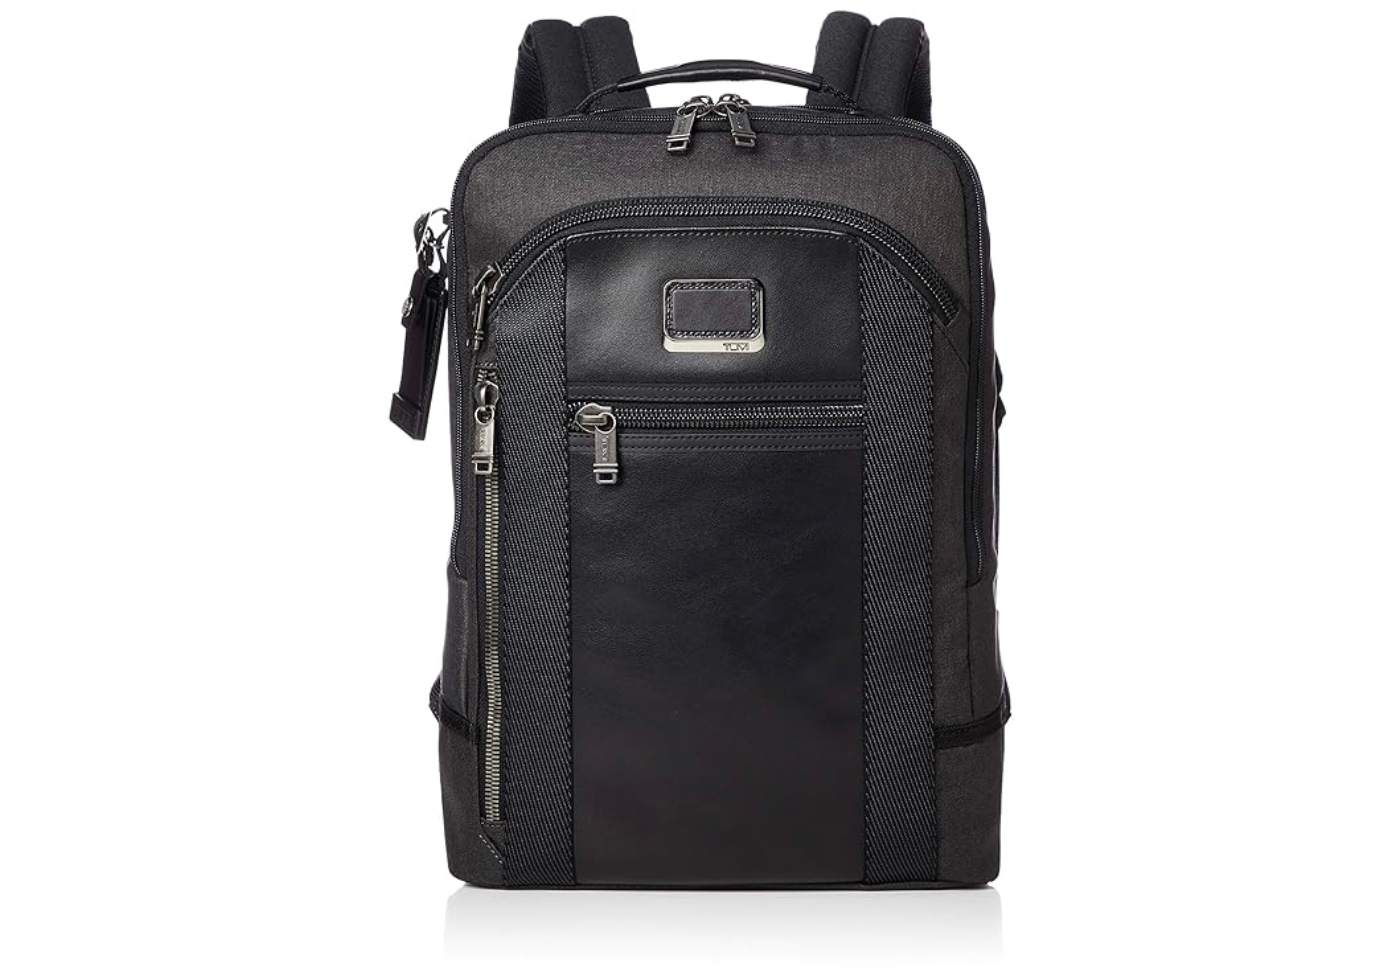 Get Set Globe 7 Best Leather Backpacks - TUMI - Alpha Bravo Davis Laptop Backpack